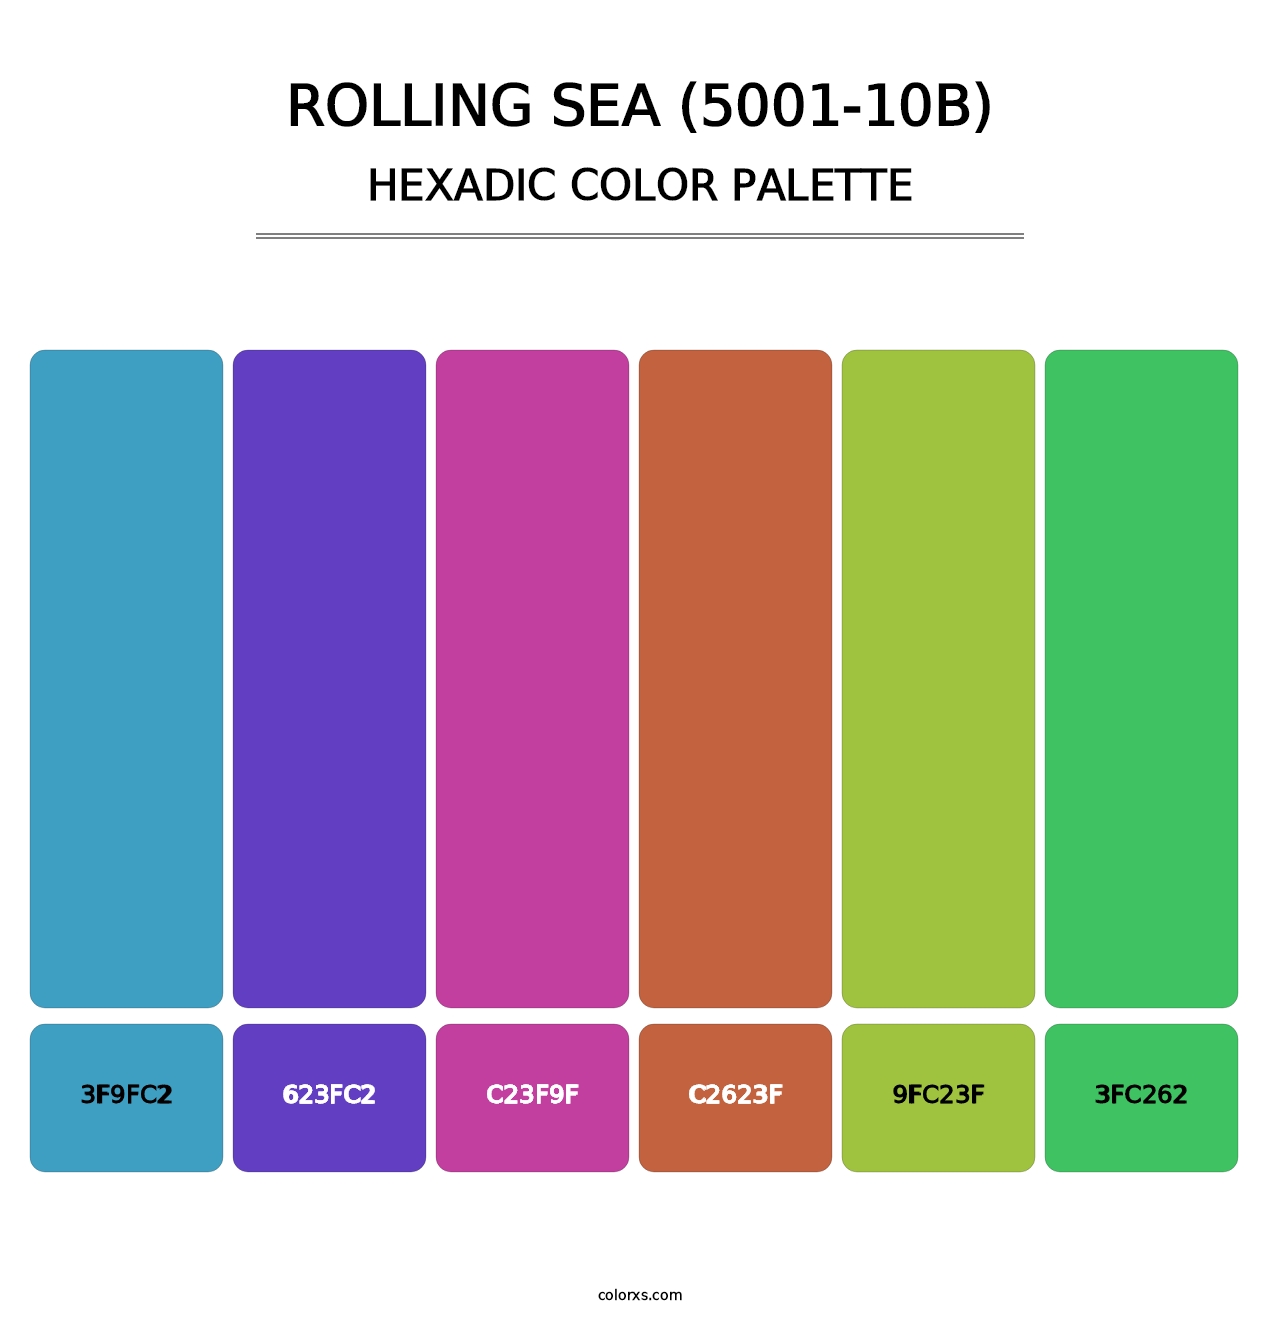 Rolling Sea (5001-10B) - Hexadic Color Palette